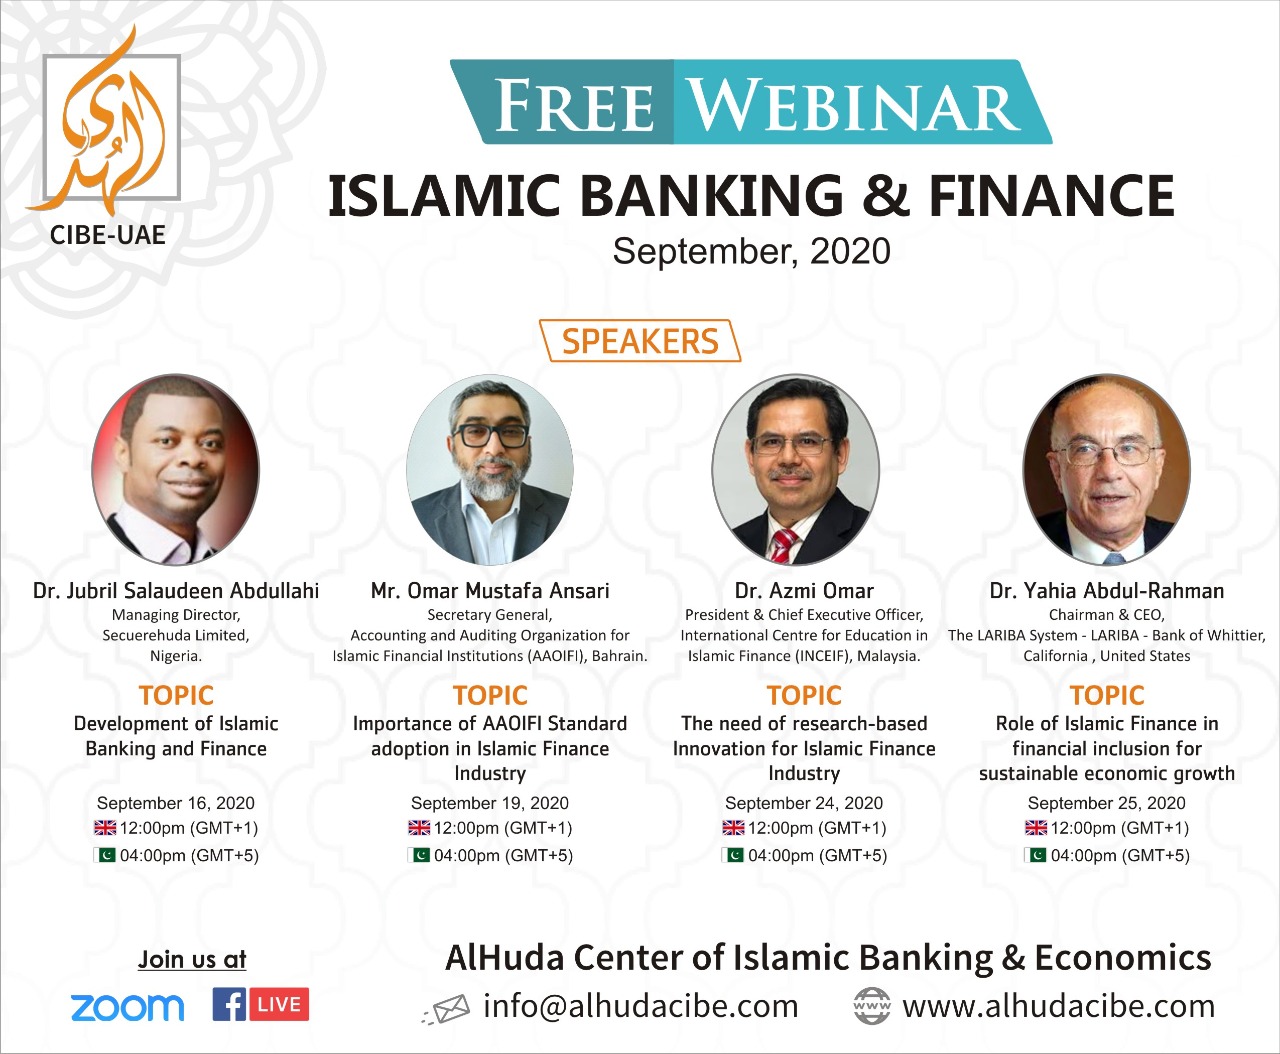 AlHuda CIBE FREE WEBINAR SERIES ON ISLAMIC BANKING AND FINANCE